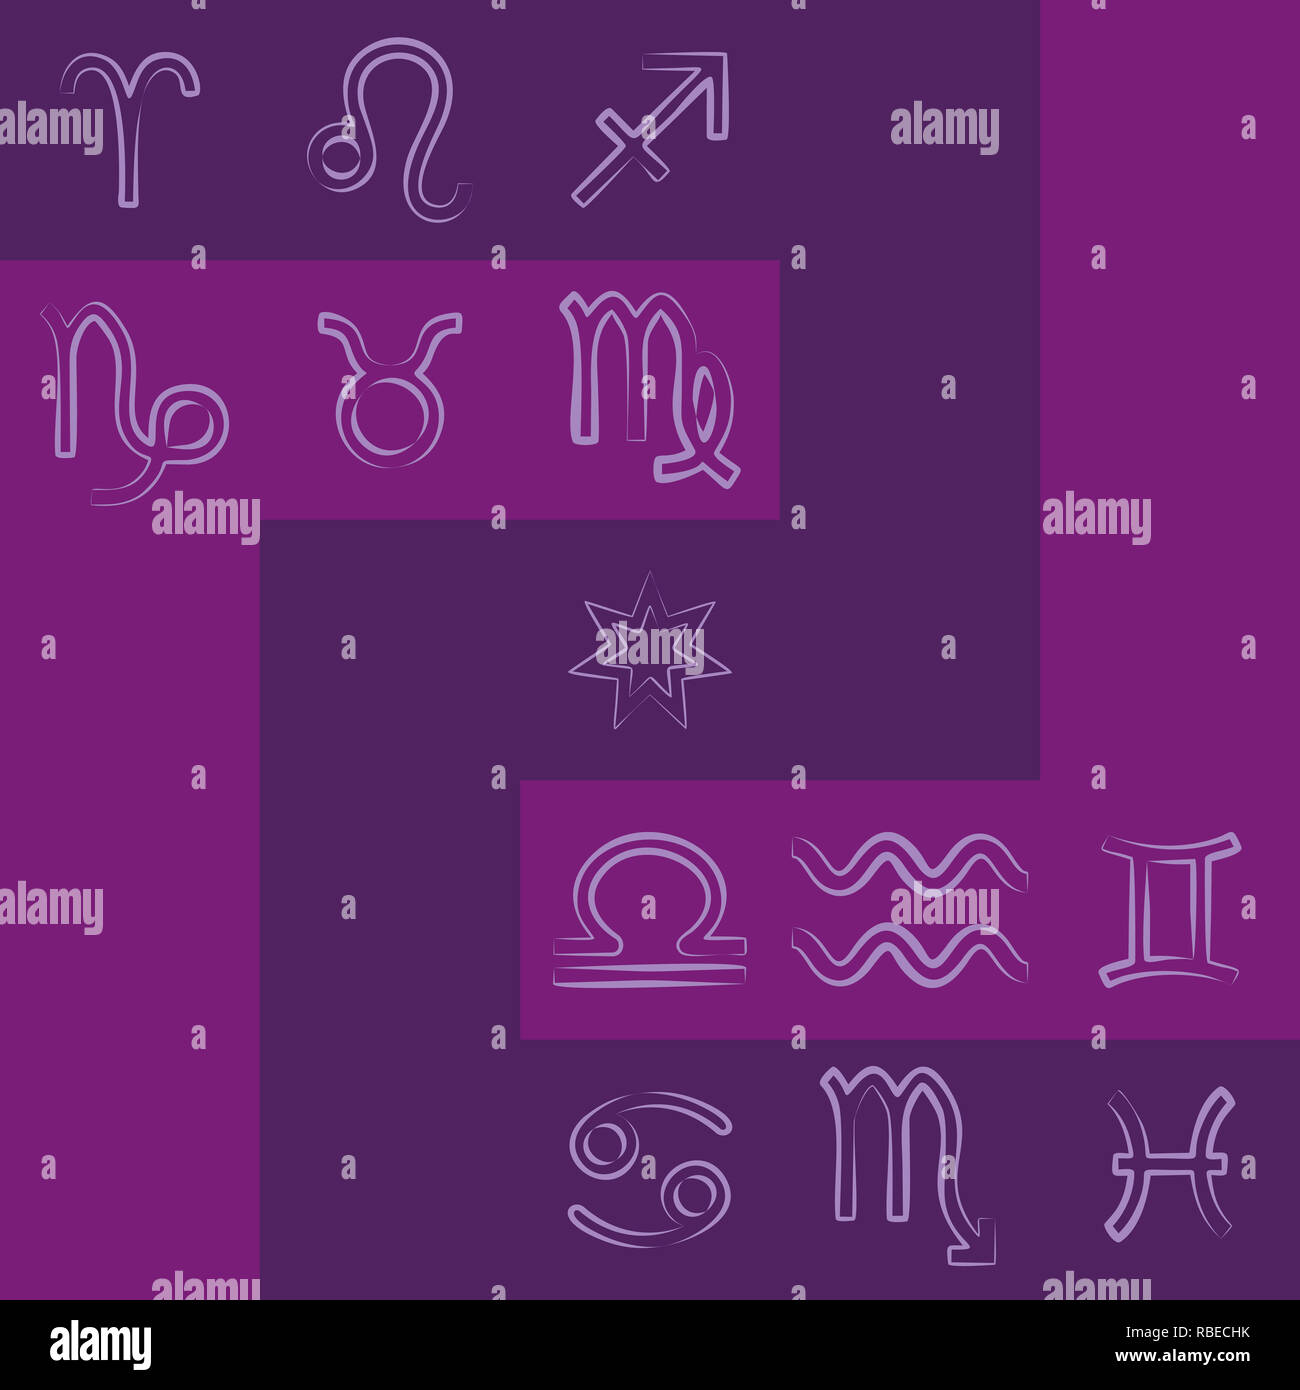 Zodiac signs irregular pattern in shades of purple Stock Photo - Alamy